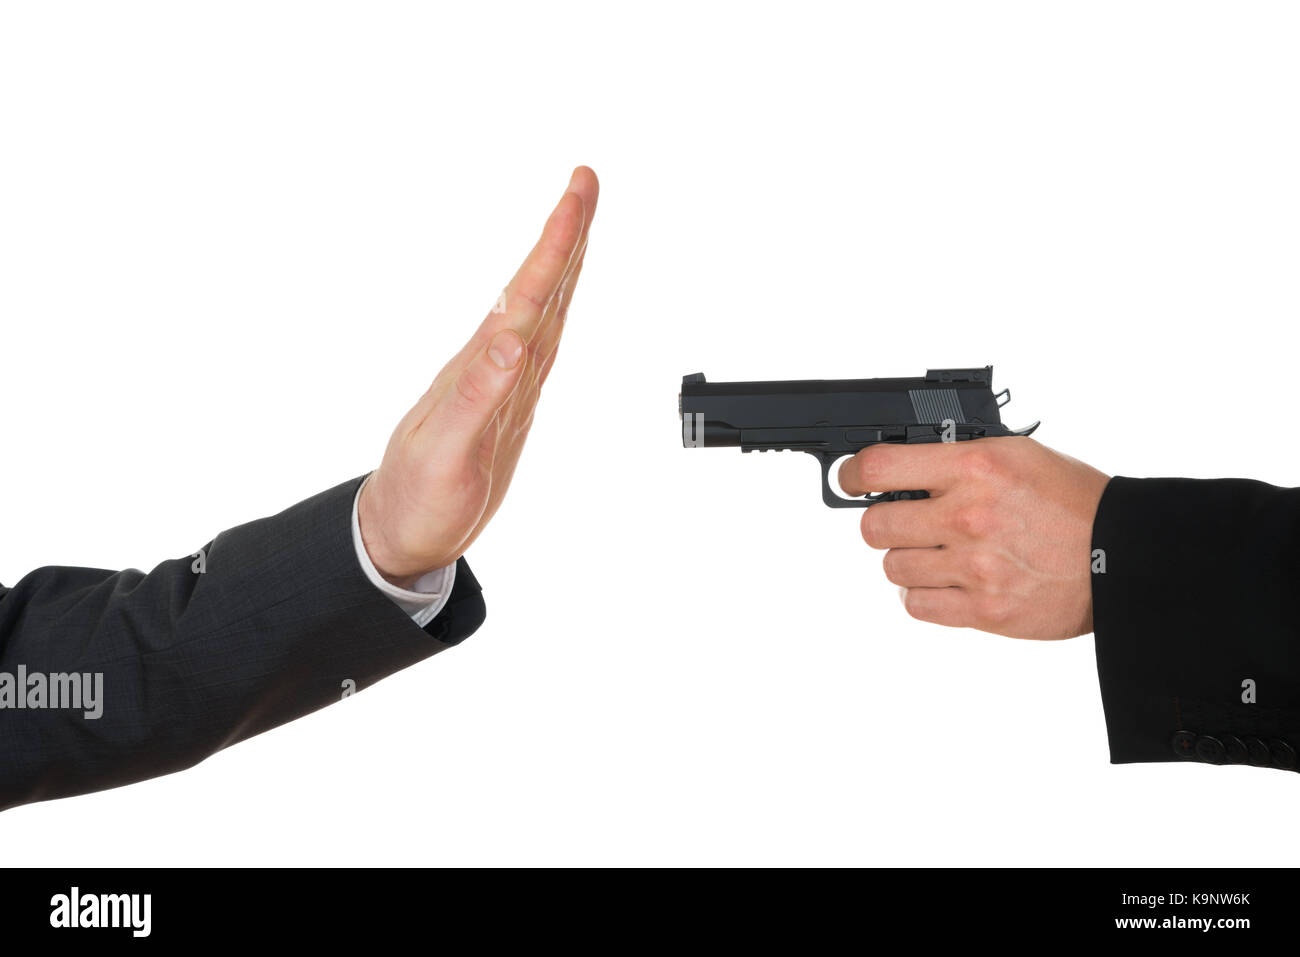 Imprenditore mano con la pistola rivolta verso i mediatori gesticolando stop su sfondo bianco Foto Stock